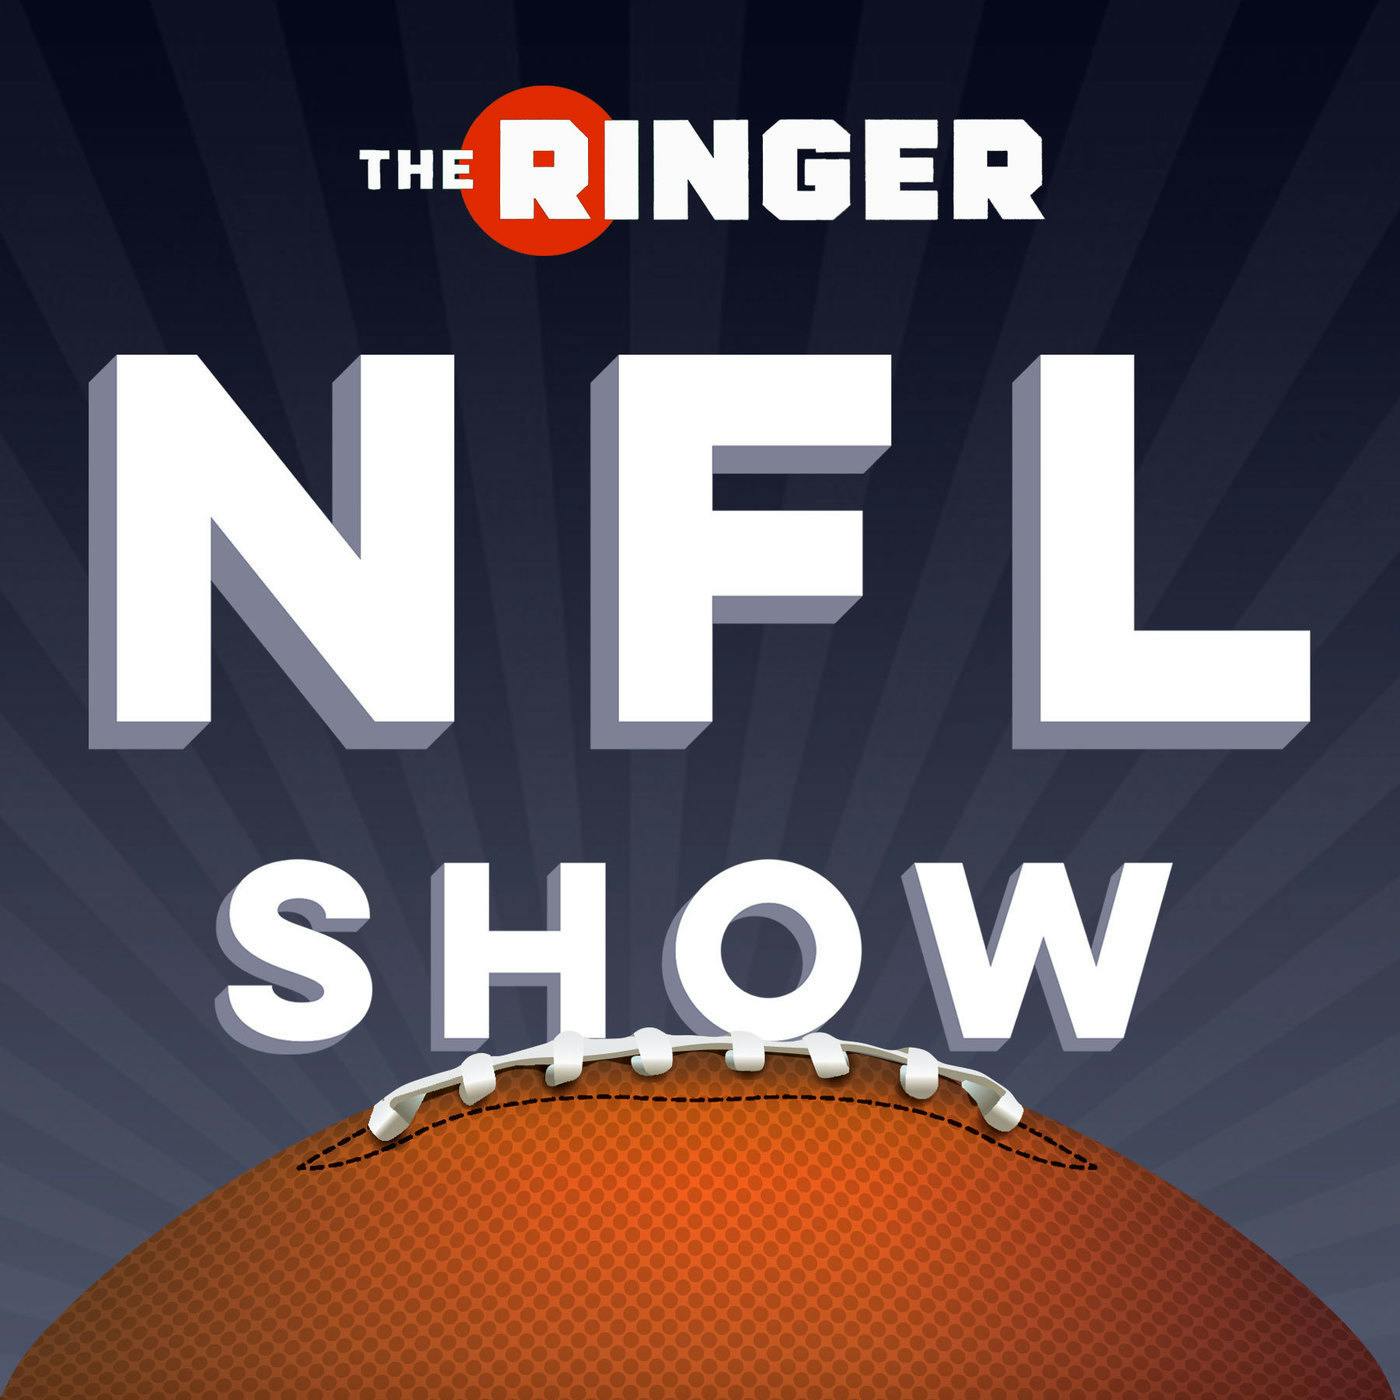 The Official Burrow vs. Tua Debate | The Ringer NFL Show